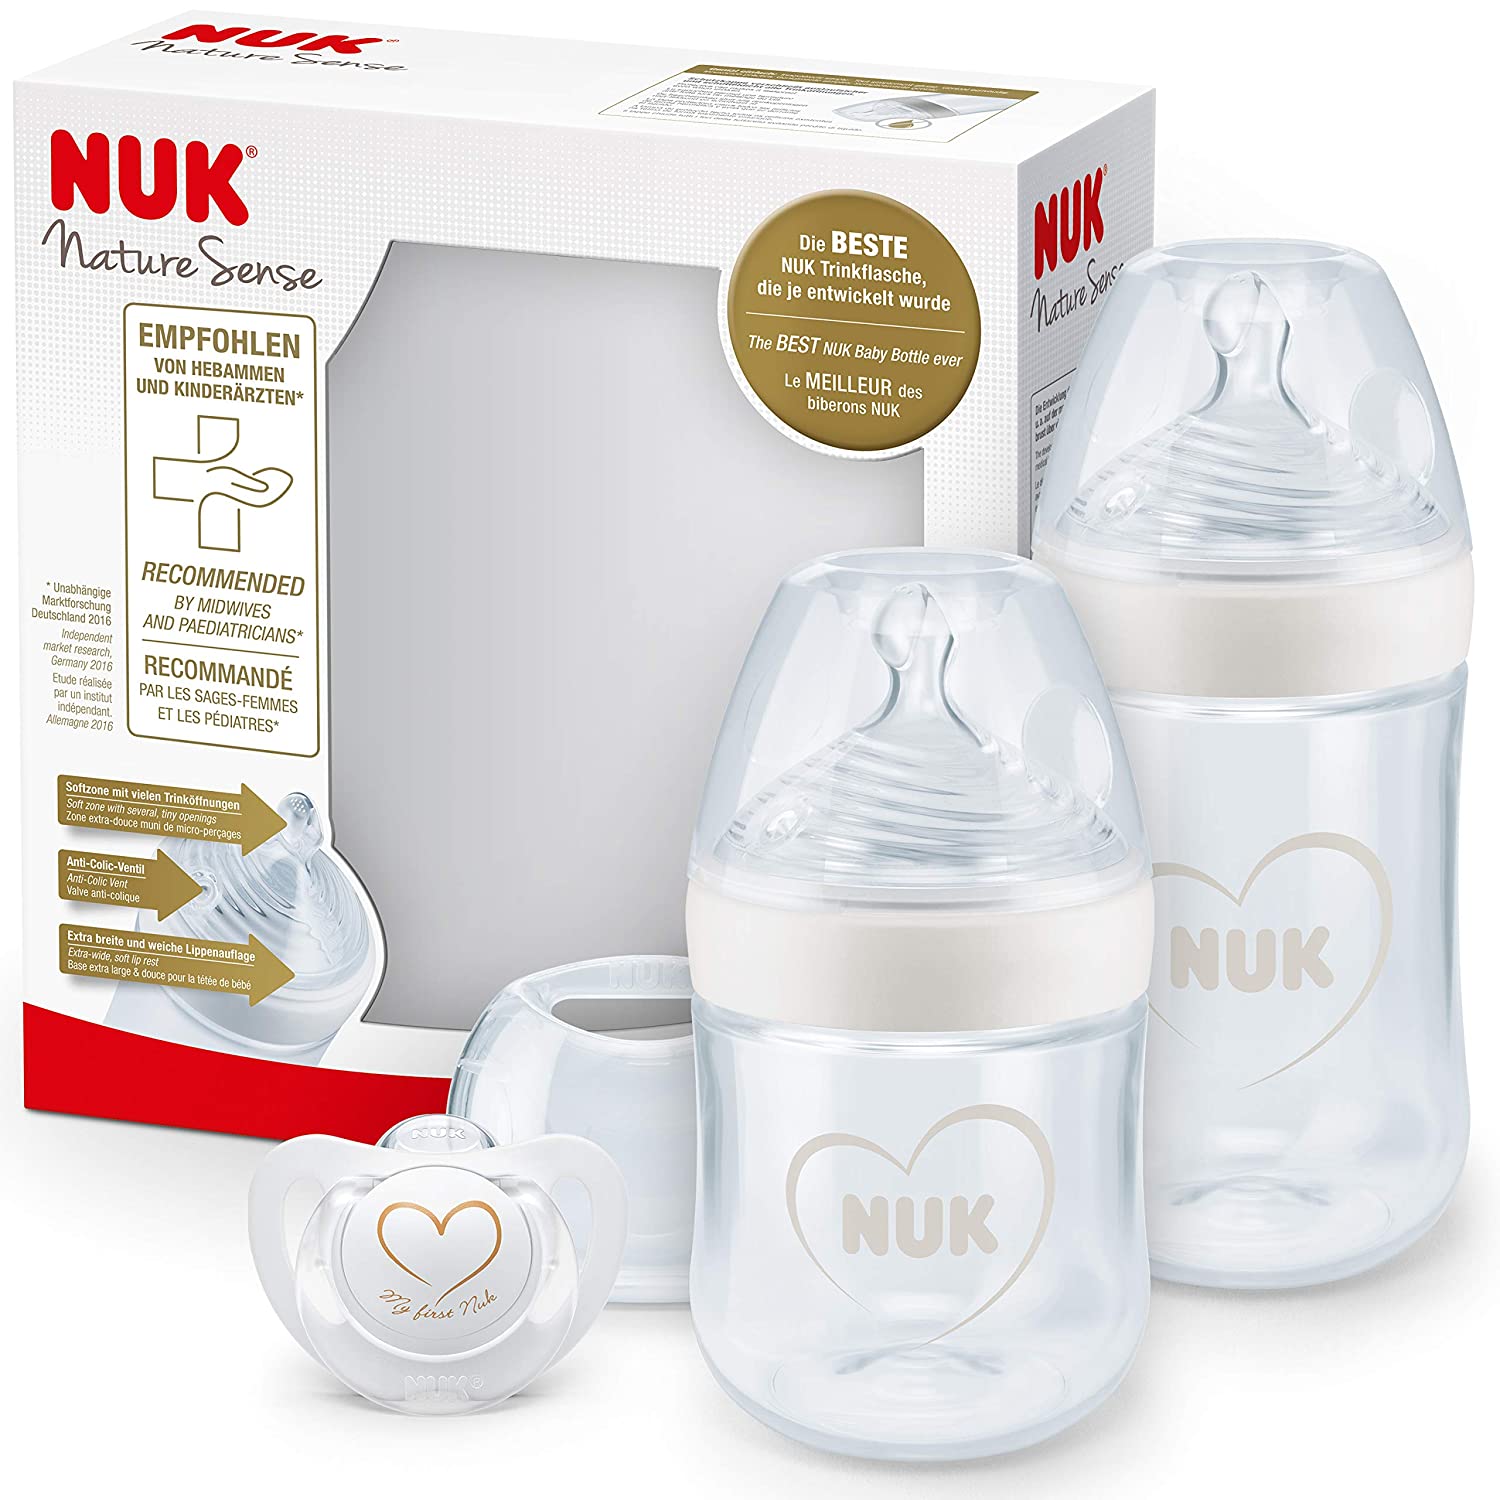 Nuk Nature Sense Baby Bottles | 0-18 Months | 2 x Anti-Colic Baby Bottles & Genius Pacifiers | BPA Free | Pack of 4 Start set beige